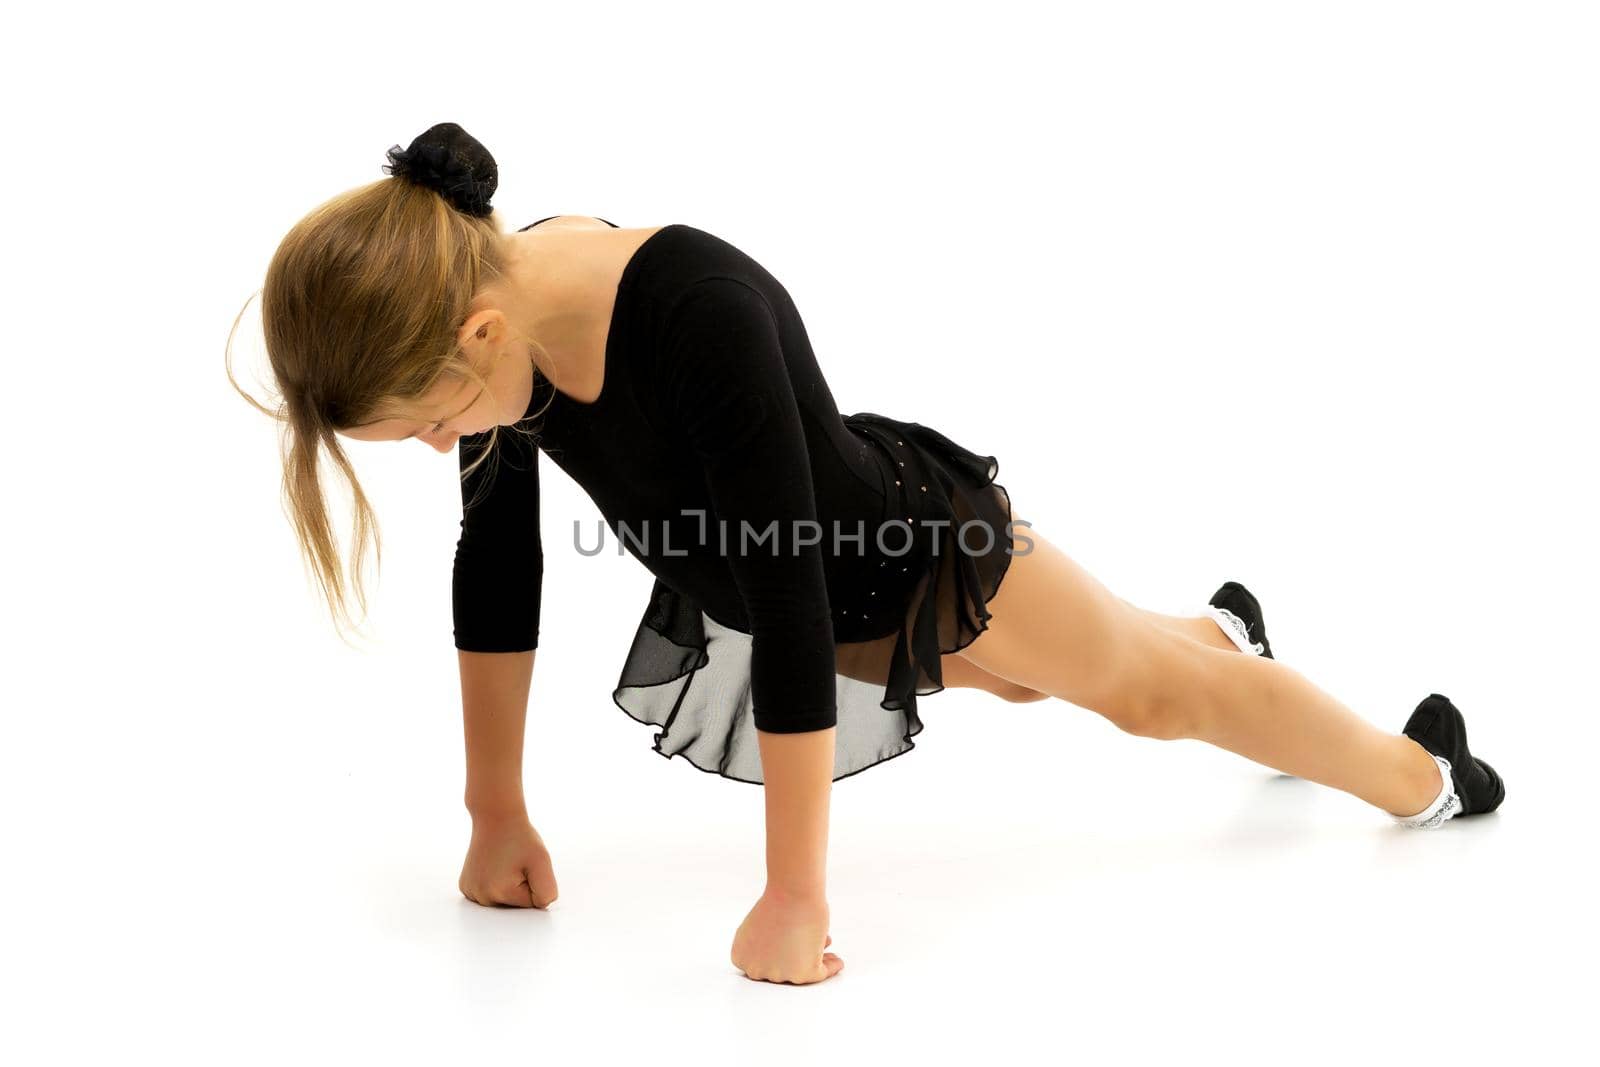 The little gymnast perform an acrobatic element on the floor. by kolesnikov_studio